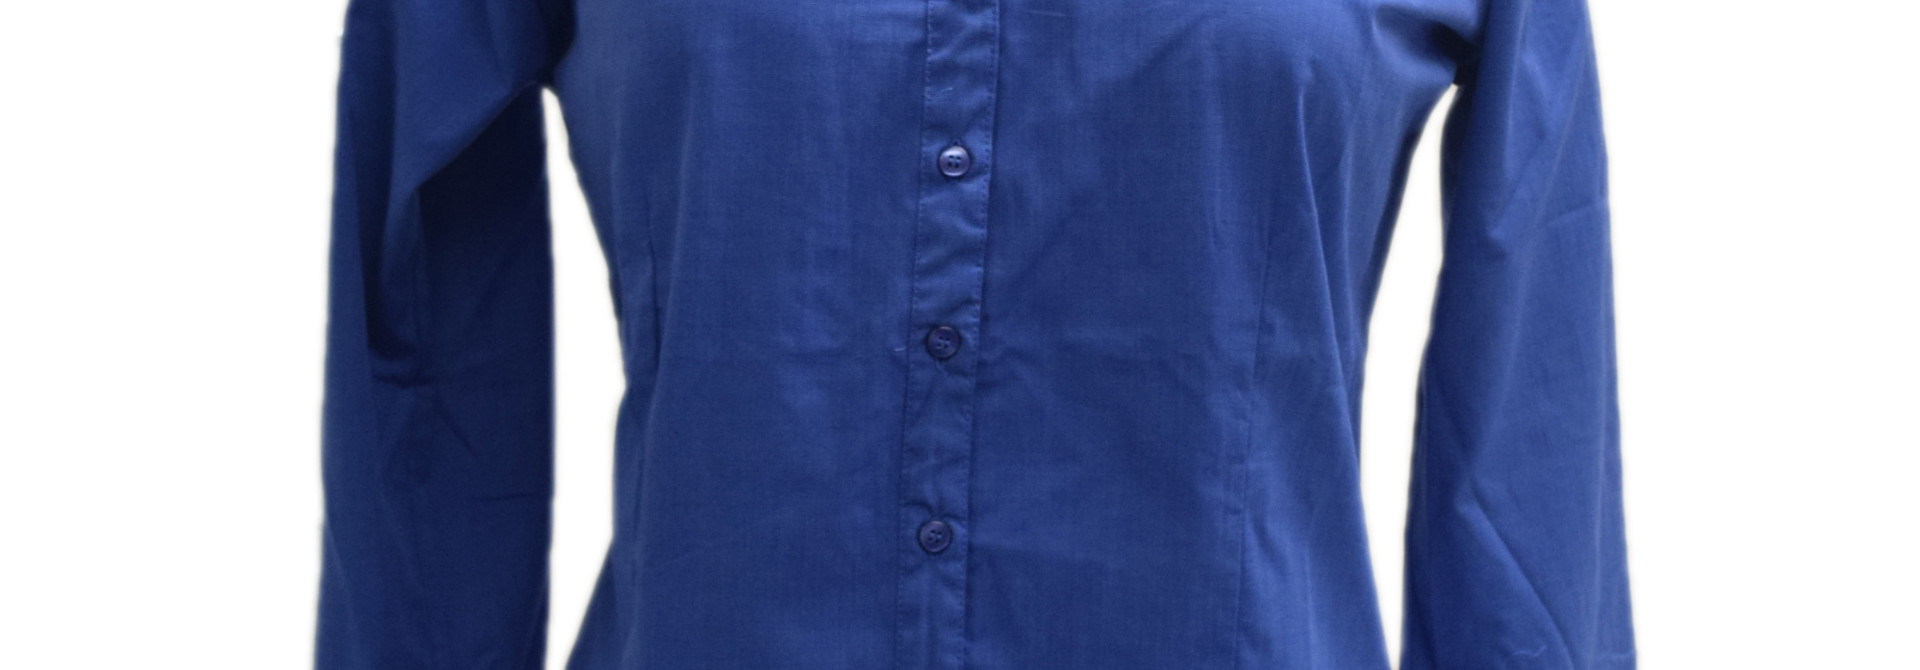 French Blue Berea College Dress Shirt